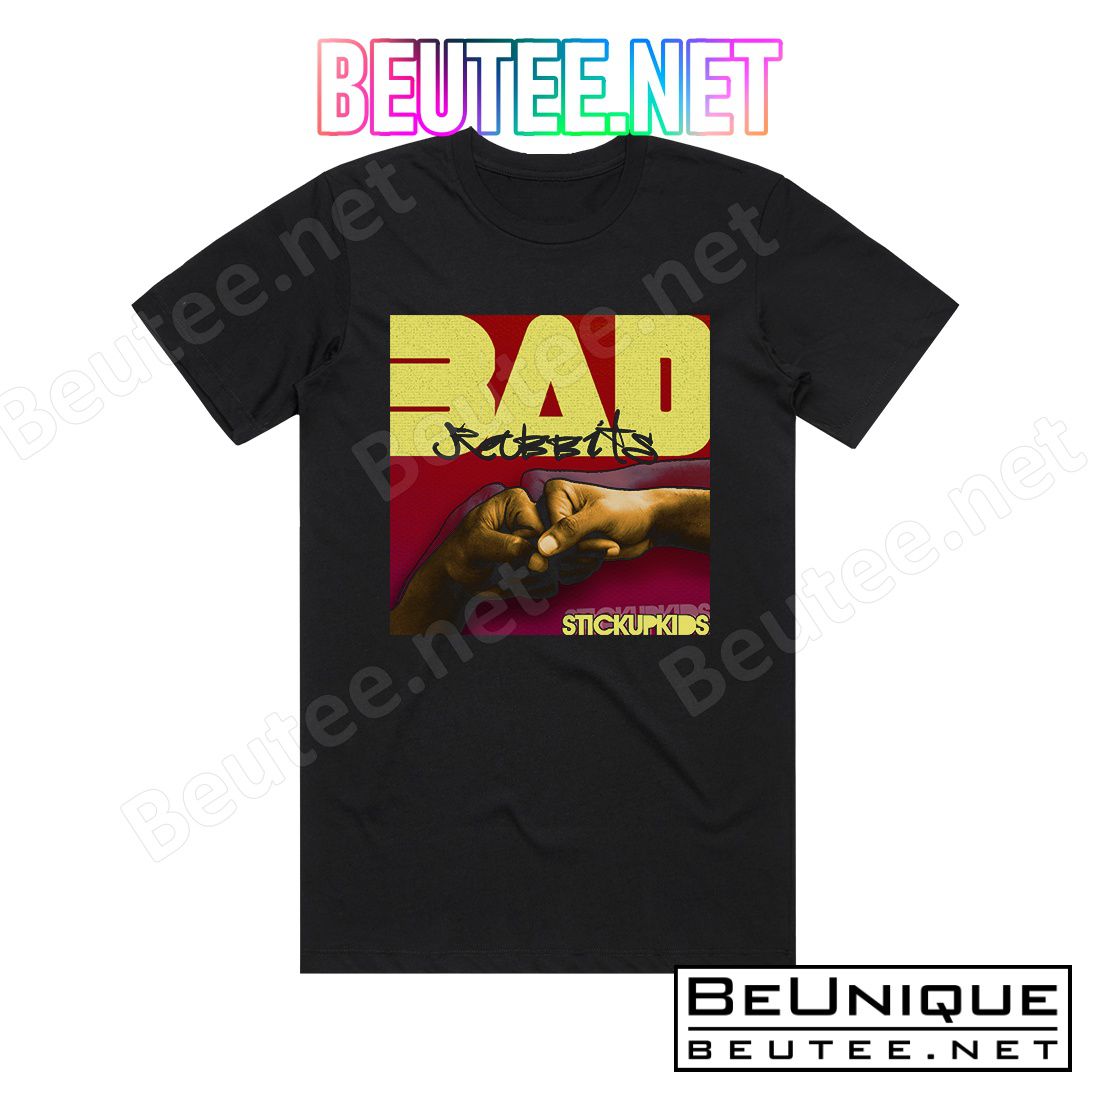 Bad Rabbits Stick Up Kids Album Cover T-Shirt